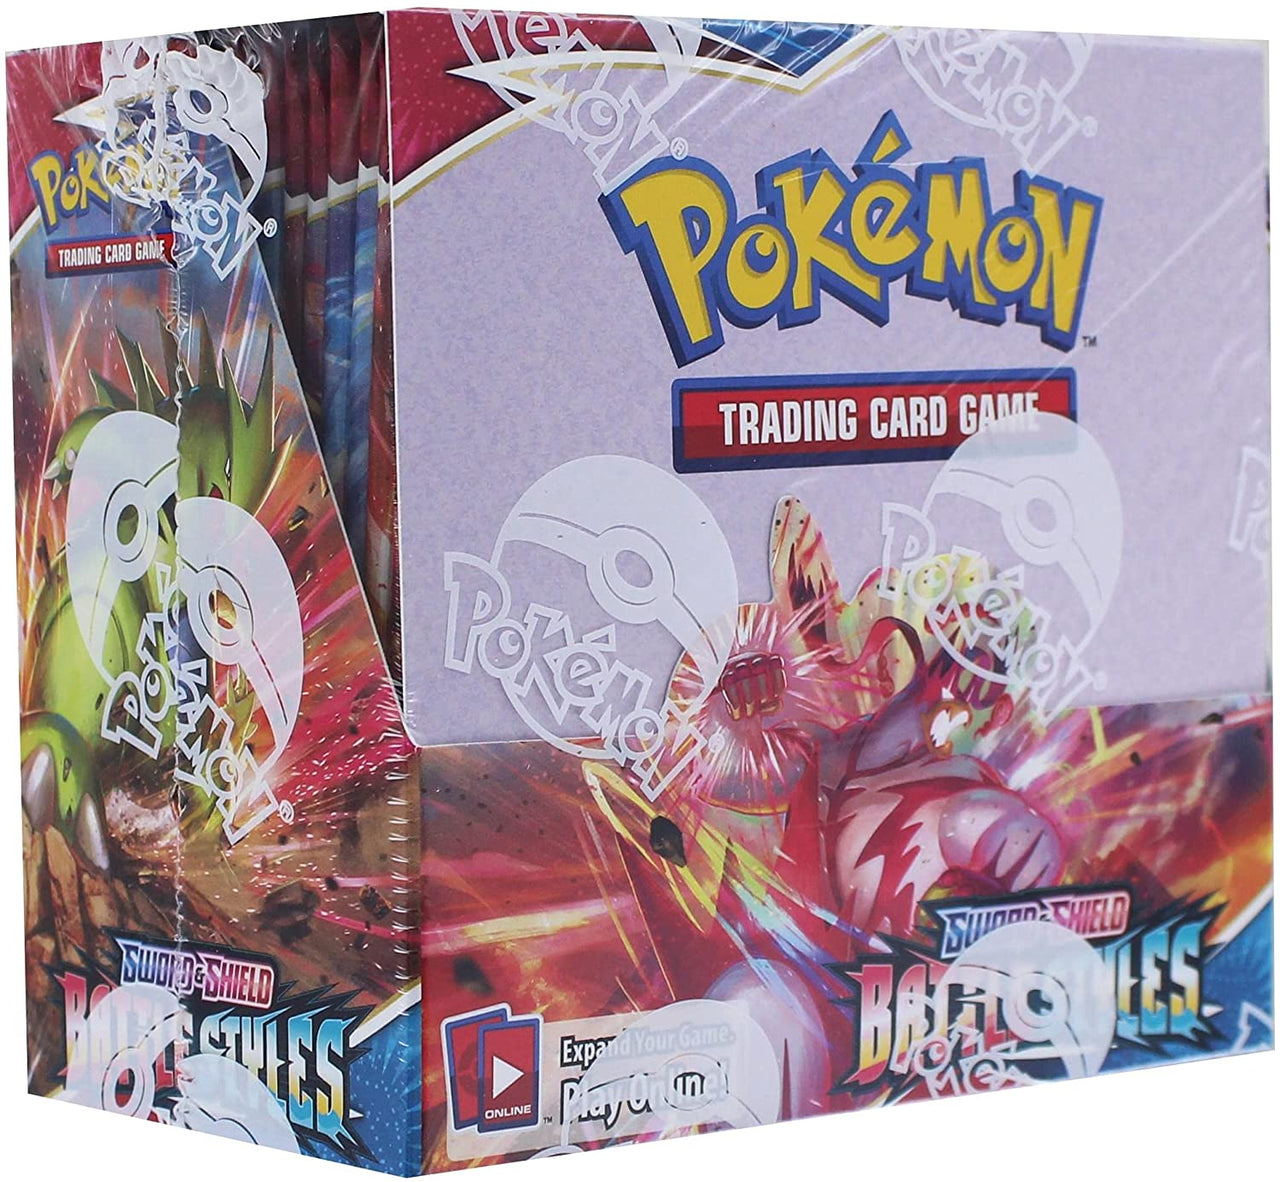 Pokémon TCG: Battle Styles Booster Box - PokeRvmBooster Box